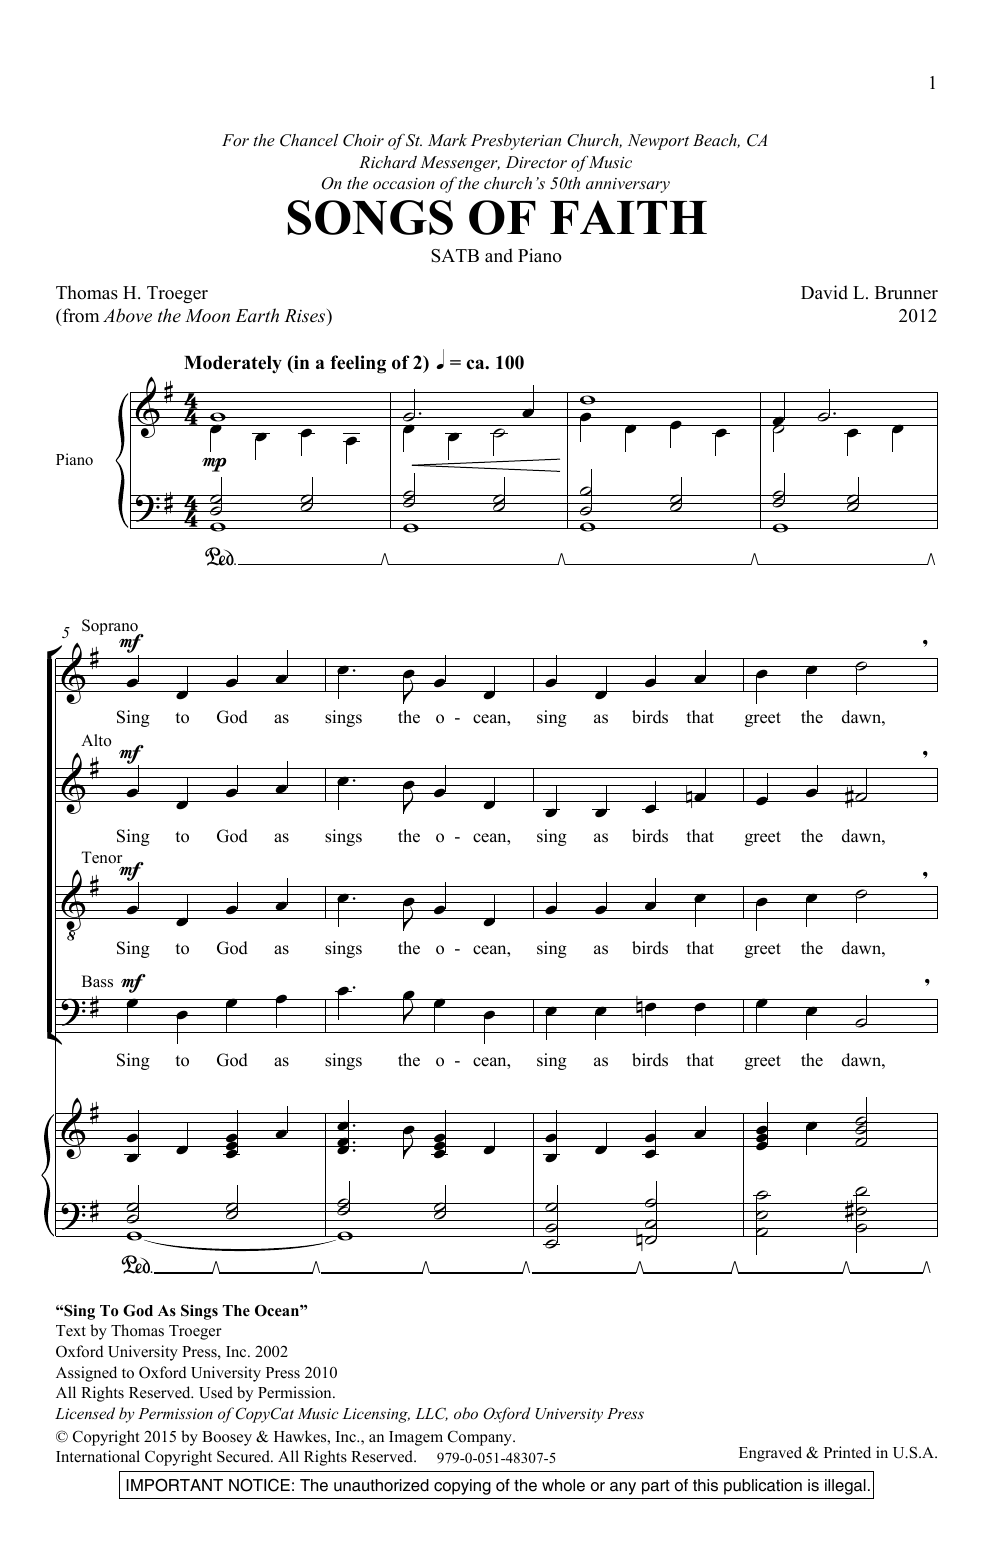 David Brunner Songs Of Faith Sheet Music Notes & Chords for SATB Choir - Download or Print PDF